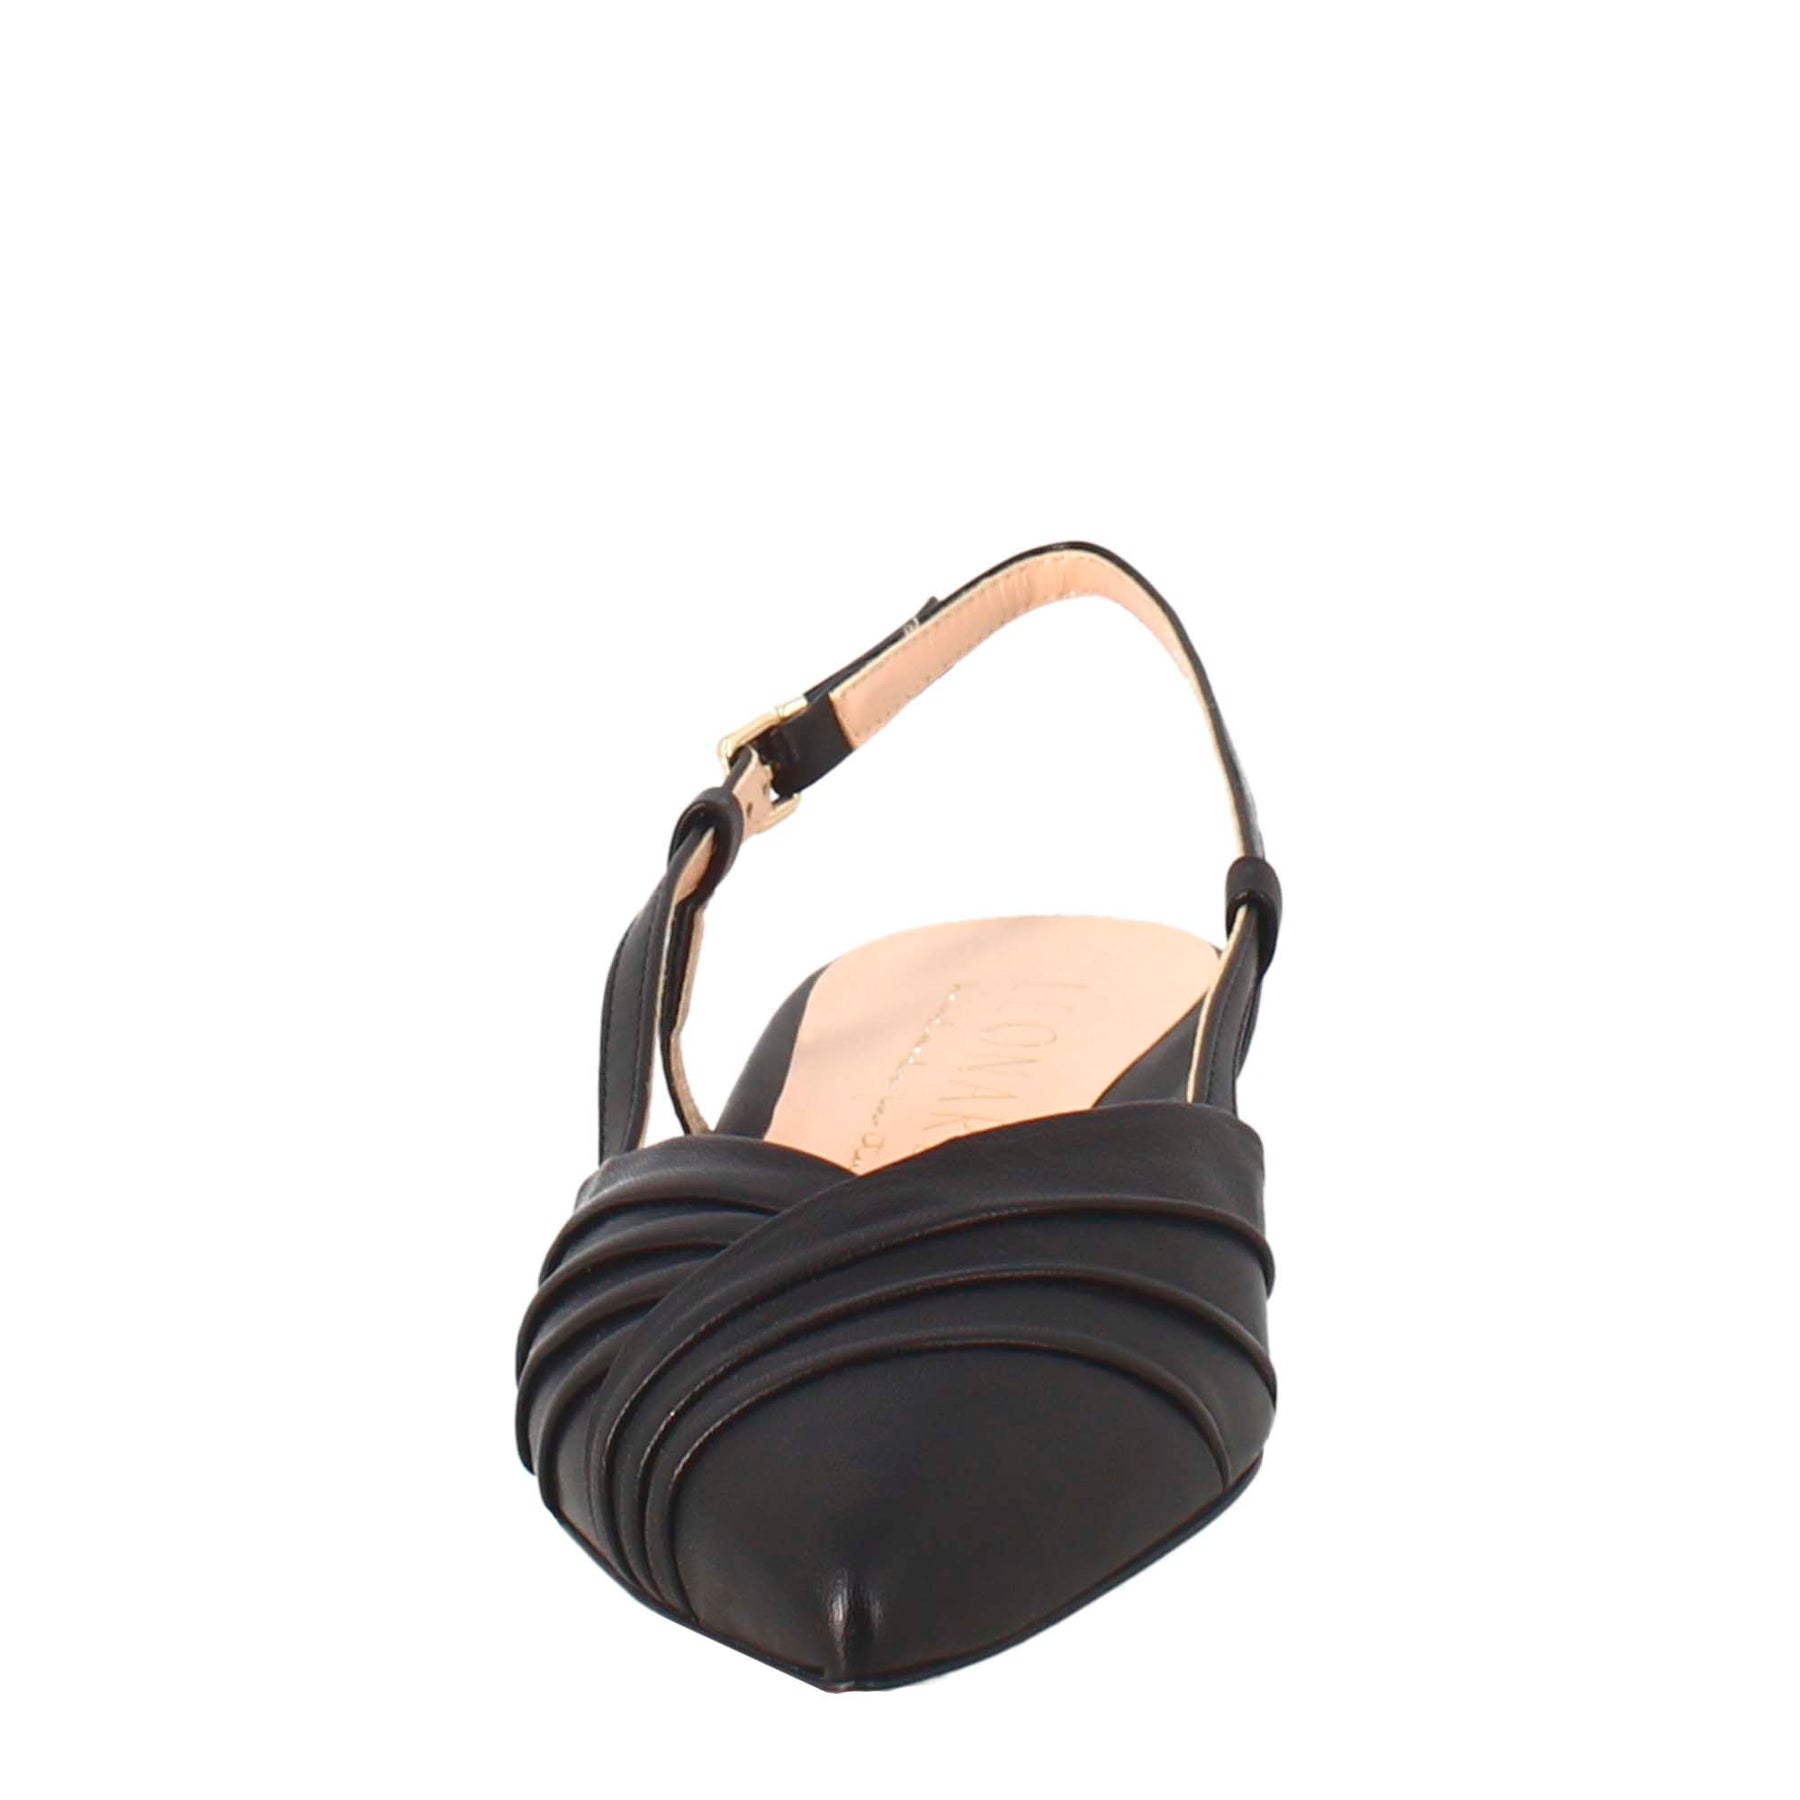 Woman's pointed toe medium heel closed sandal in black pleated leather